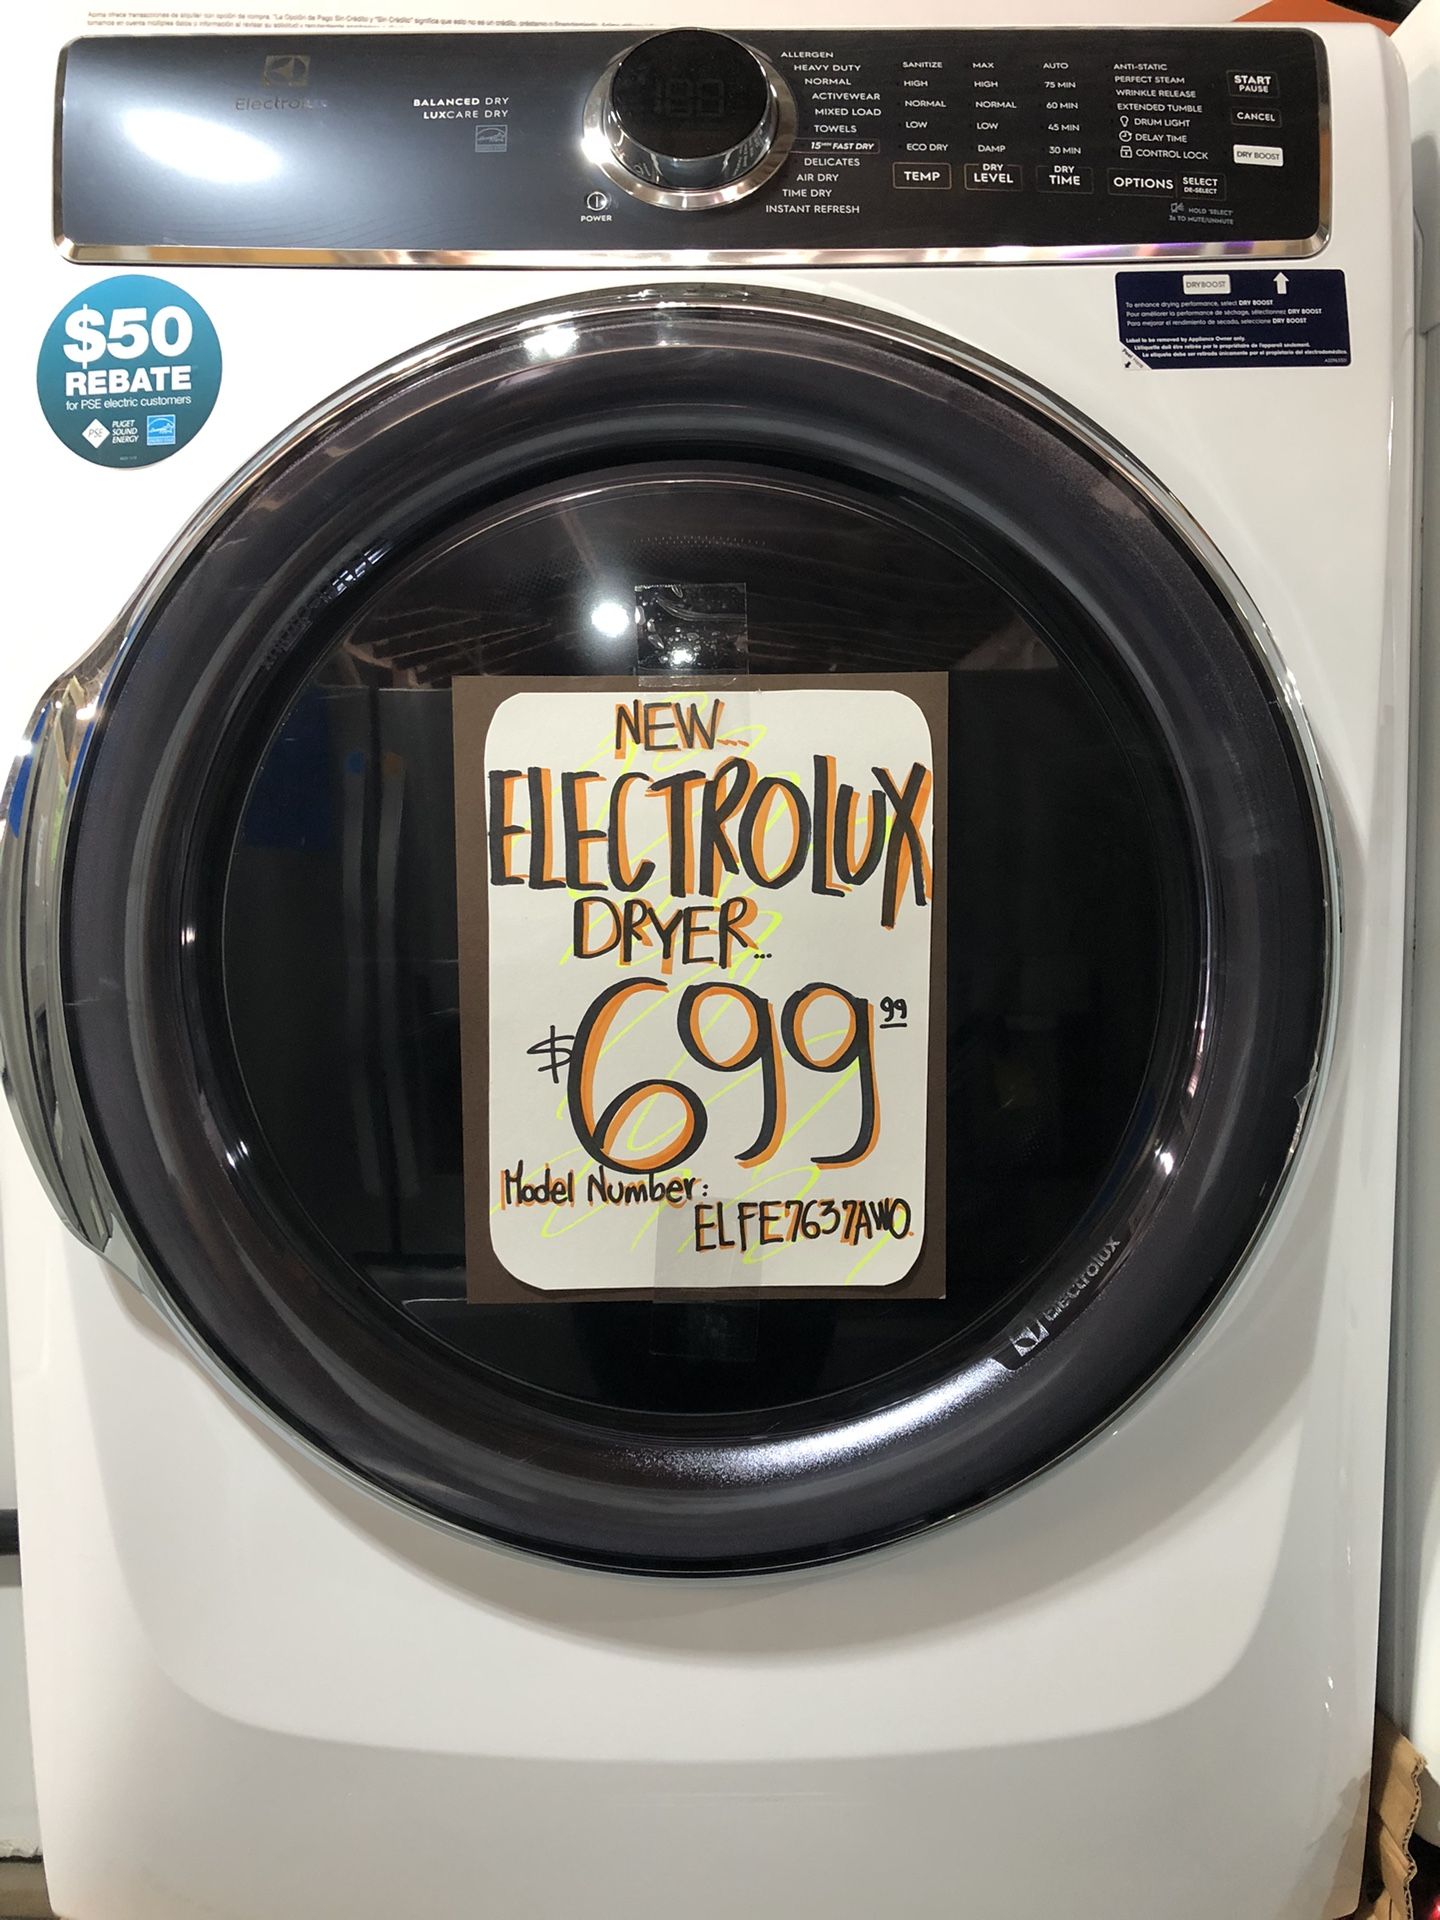 New Electrolux Dryer 